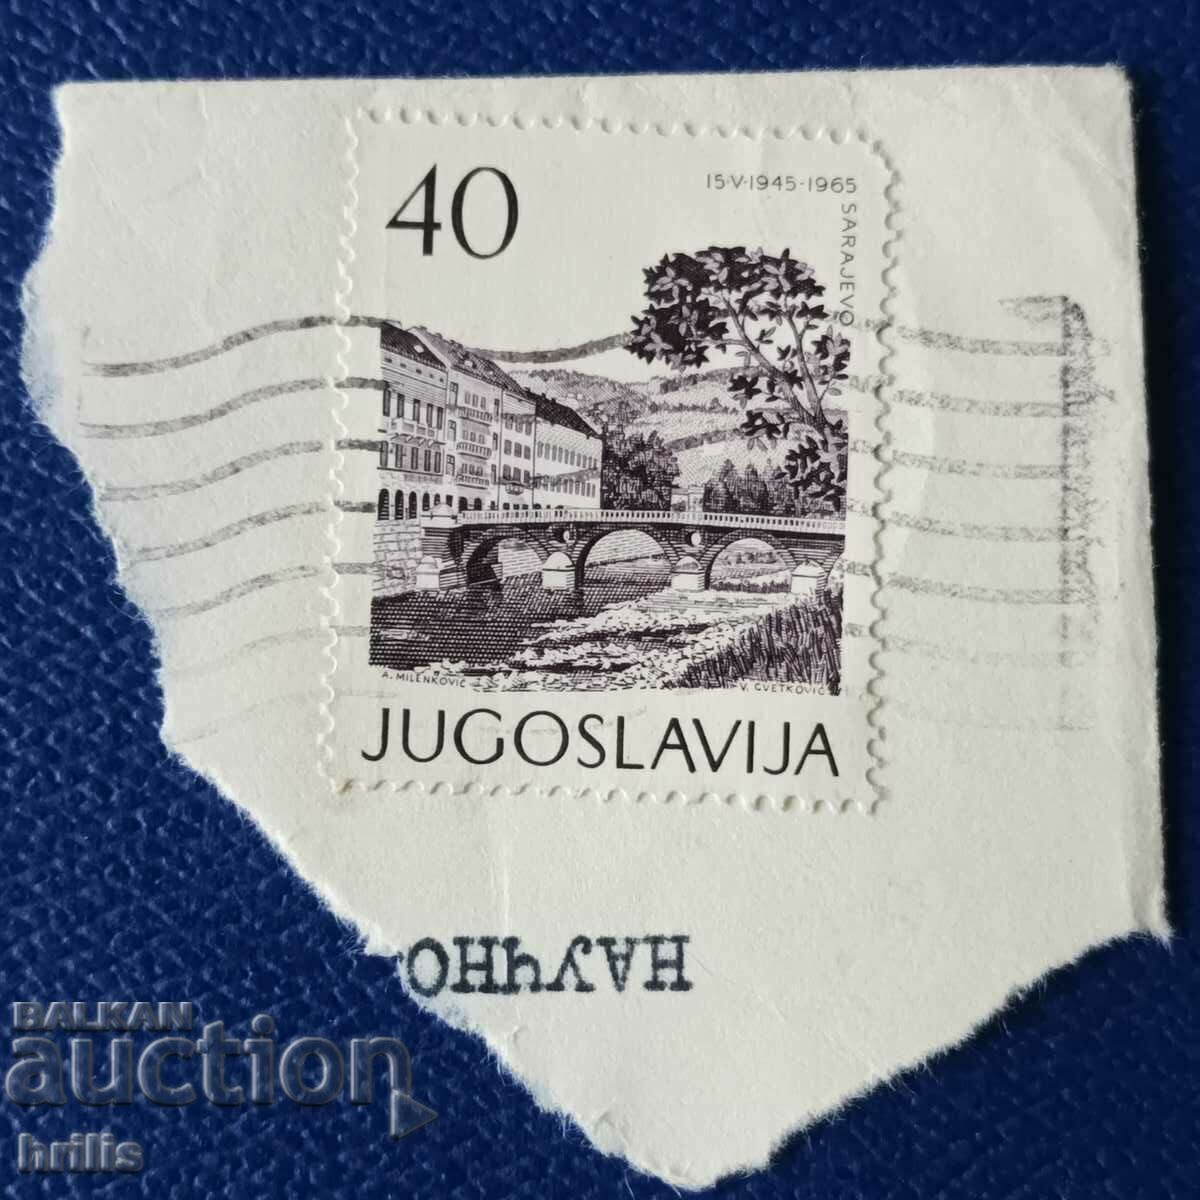 YUGOSLAVIA 1965 - ENVELOPE CUTTING, SARAJEVO